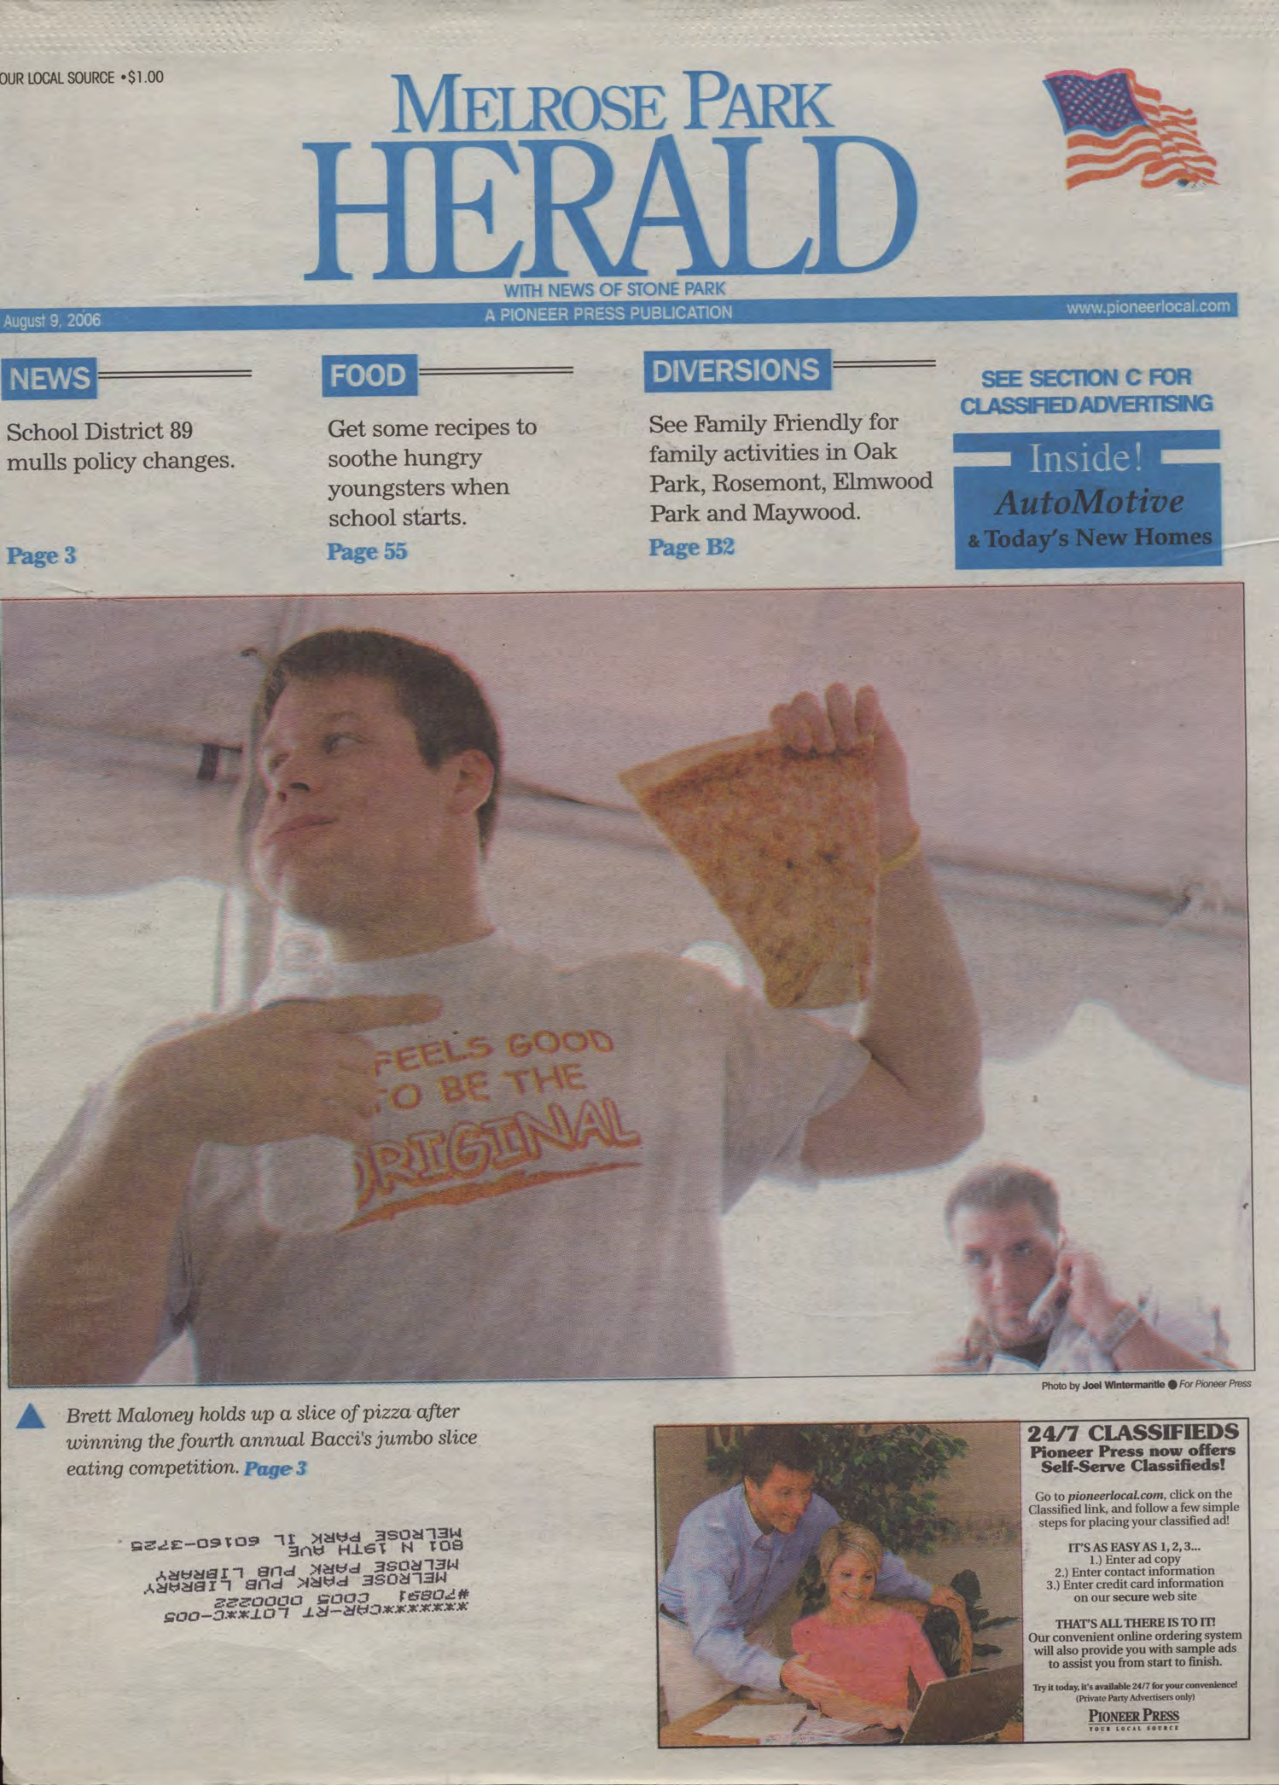 The Herald – 20060809